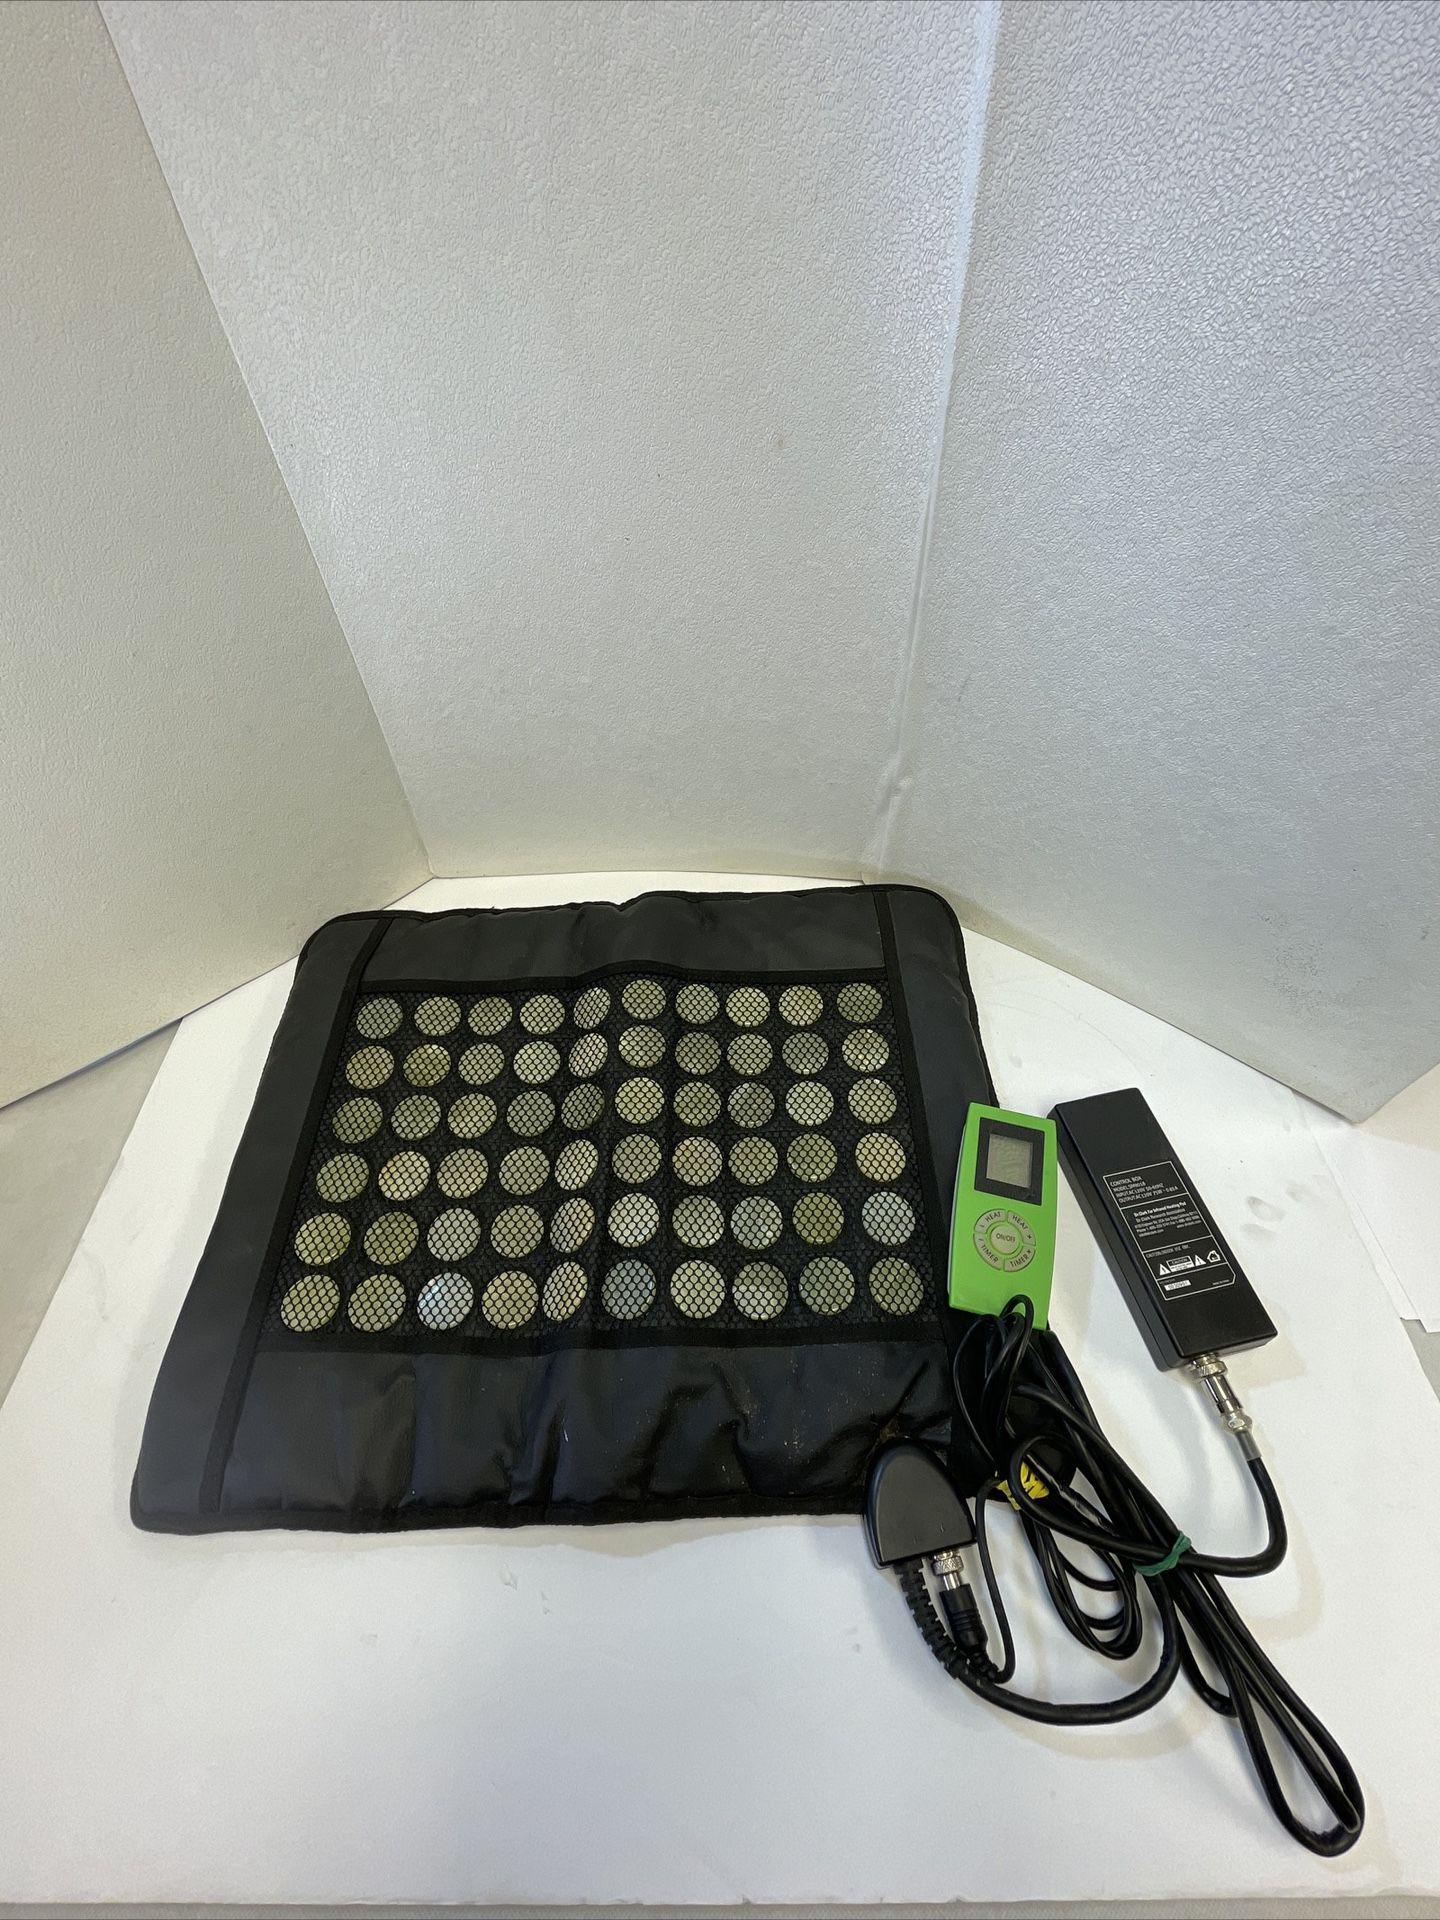 Dr. Clark Far Infrared Jade Heating Pad Mat Jade Stones Model SM9018 - Tested